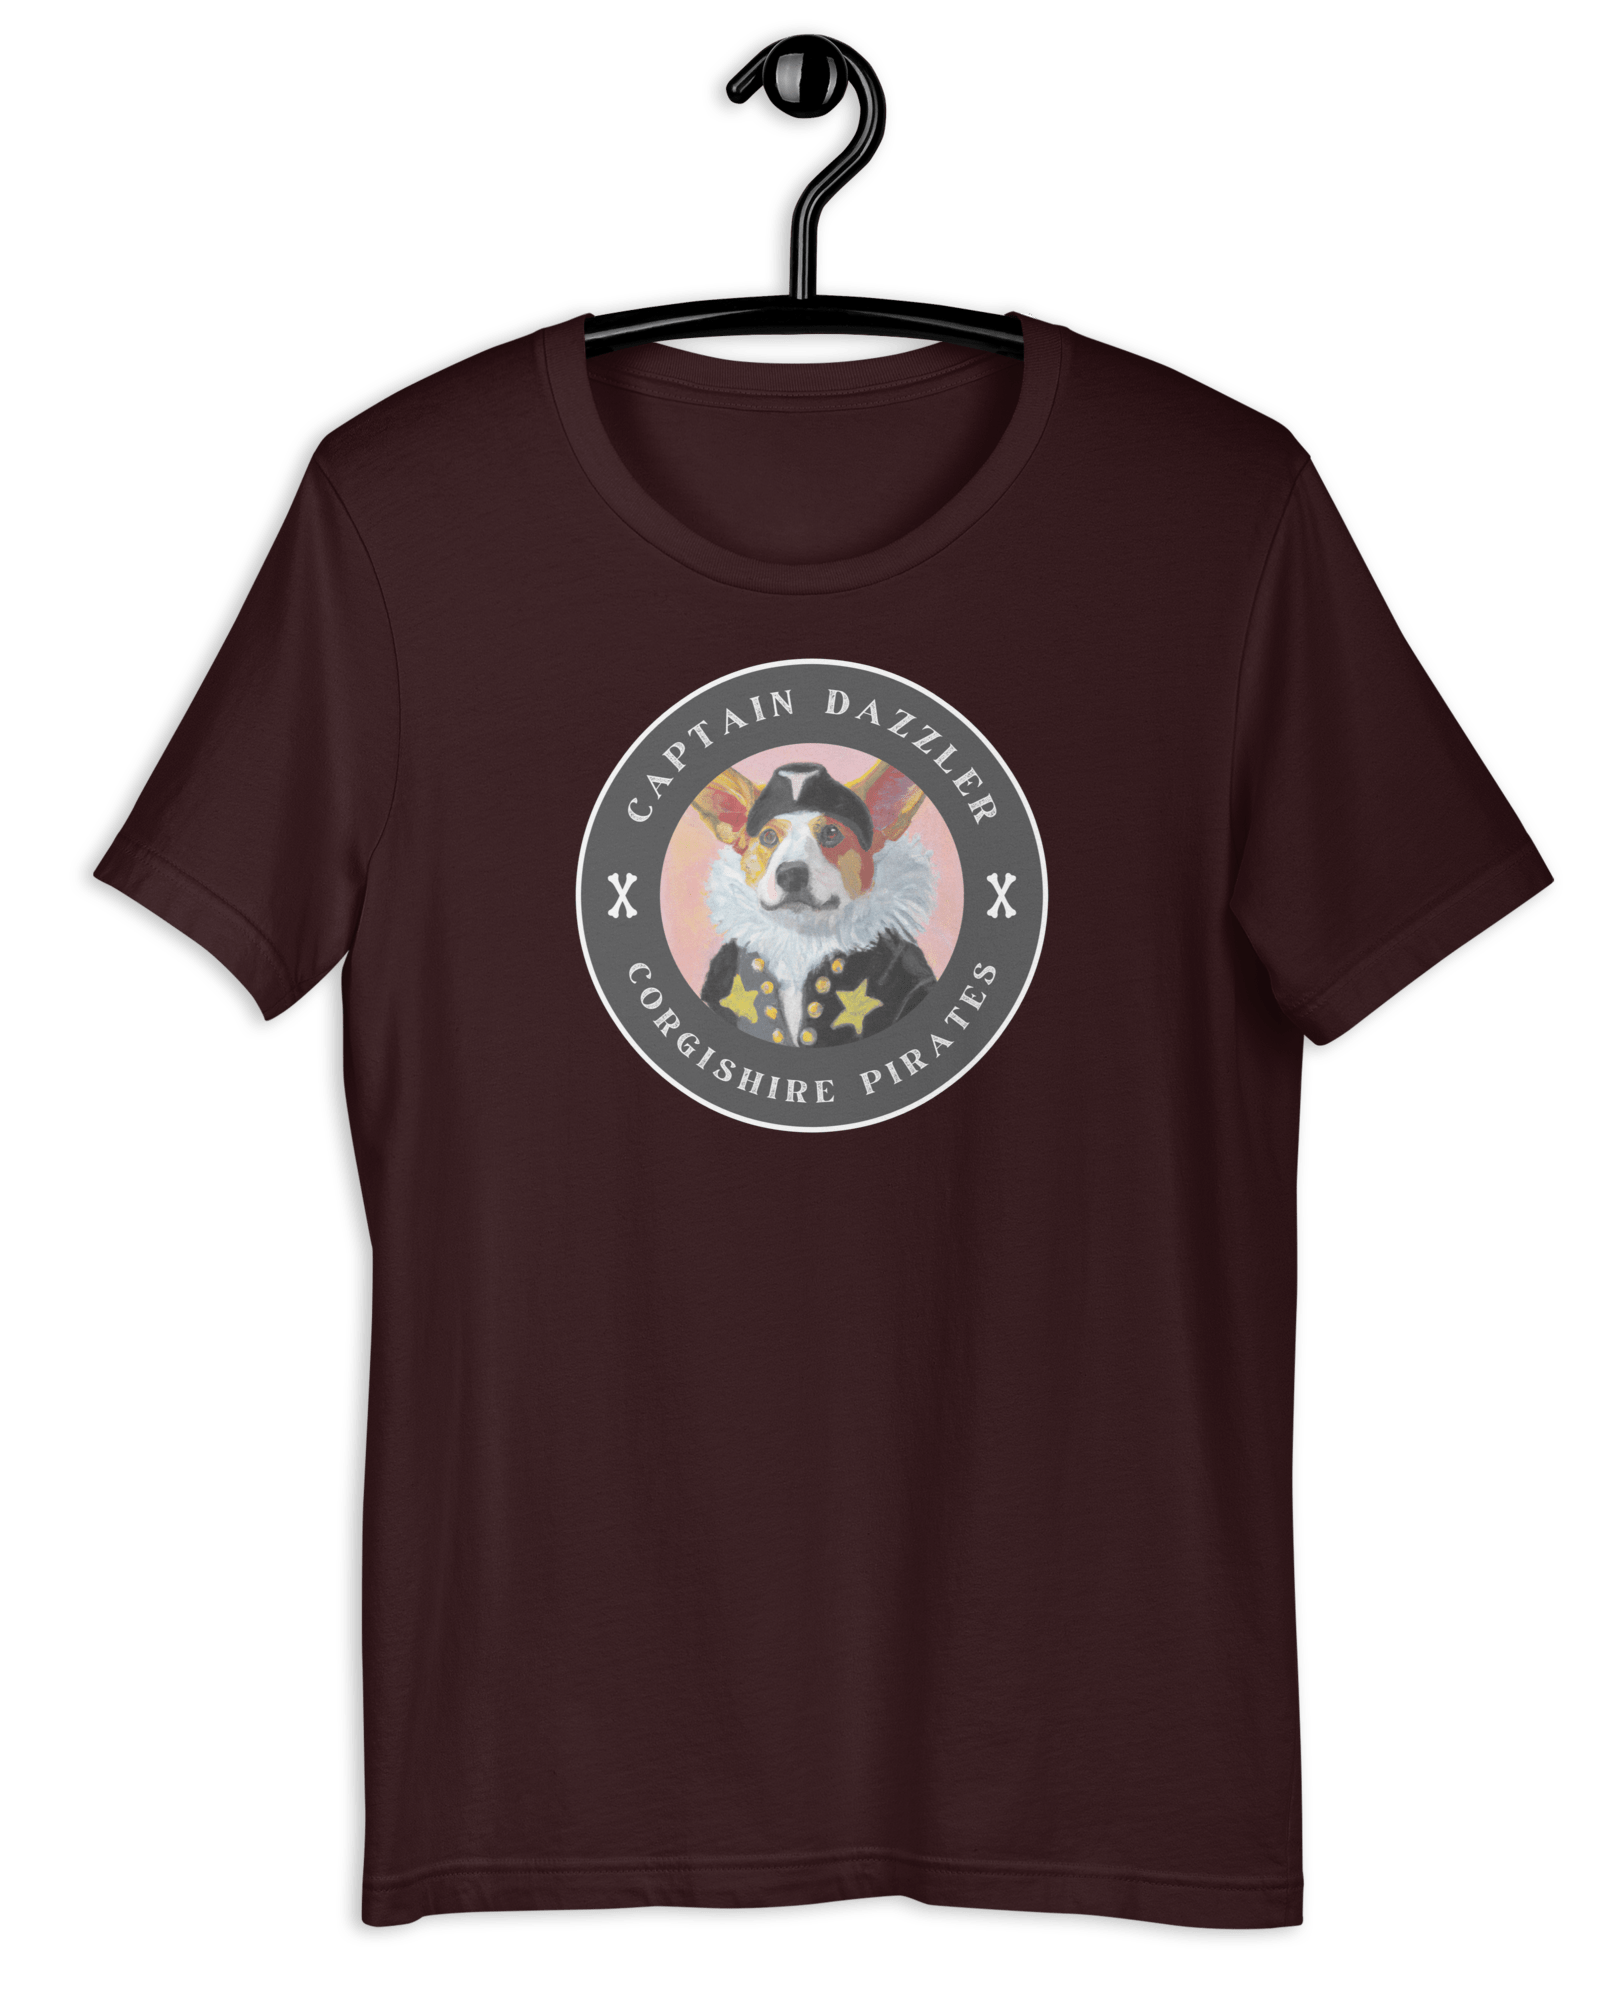 Captain Dazzler Corgishire Pirates T-shirt Oxblood Black / S Shirts & Tops Jolly & Goode